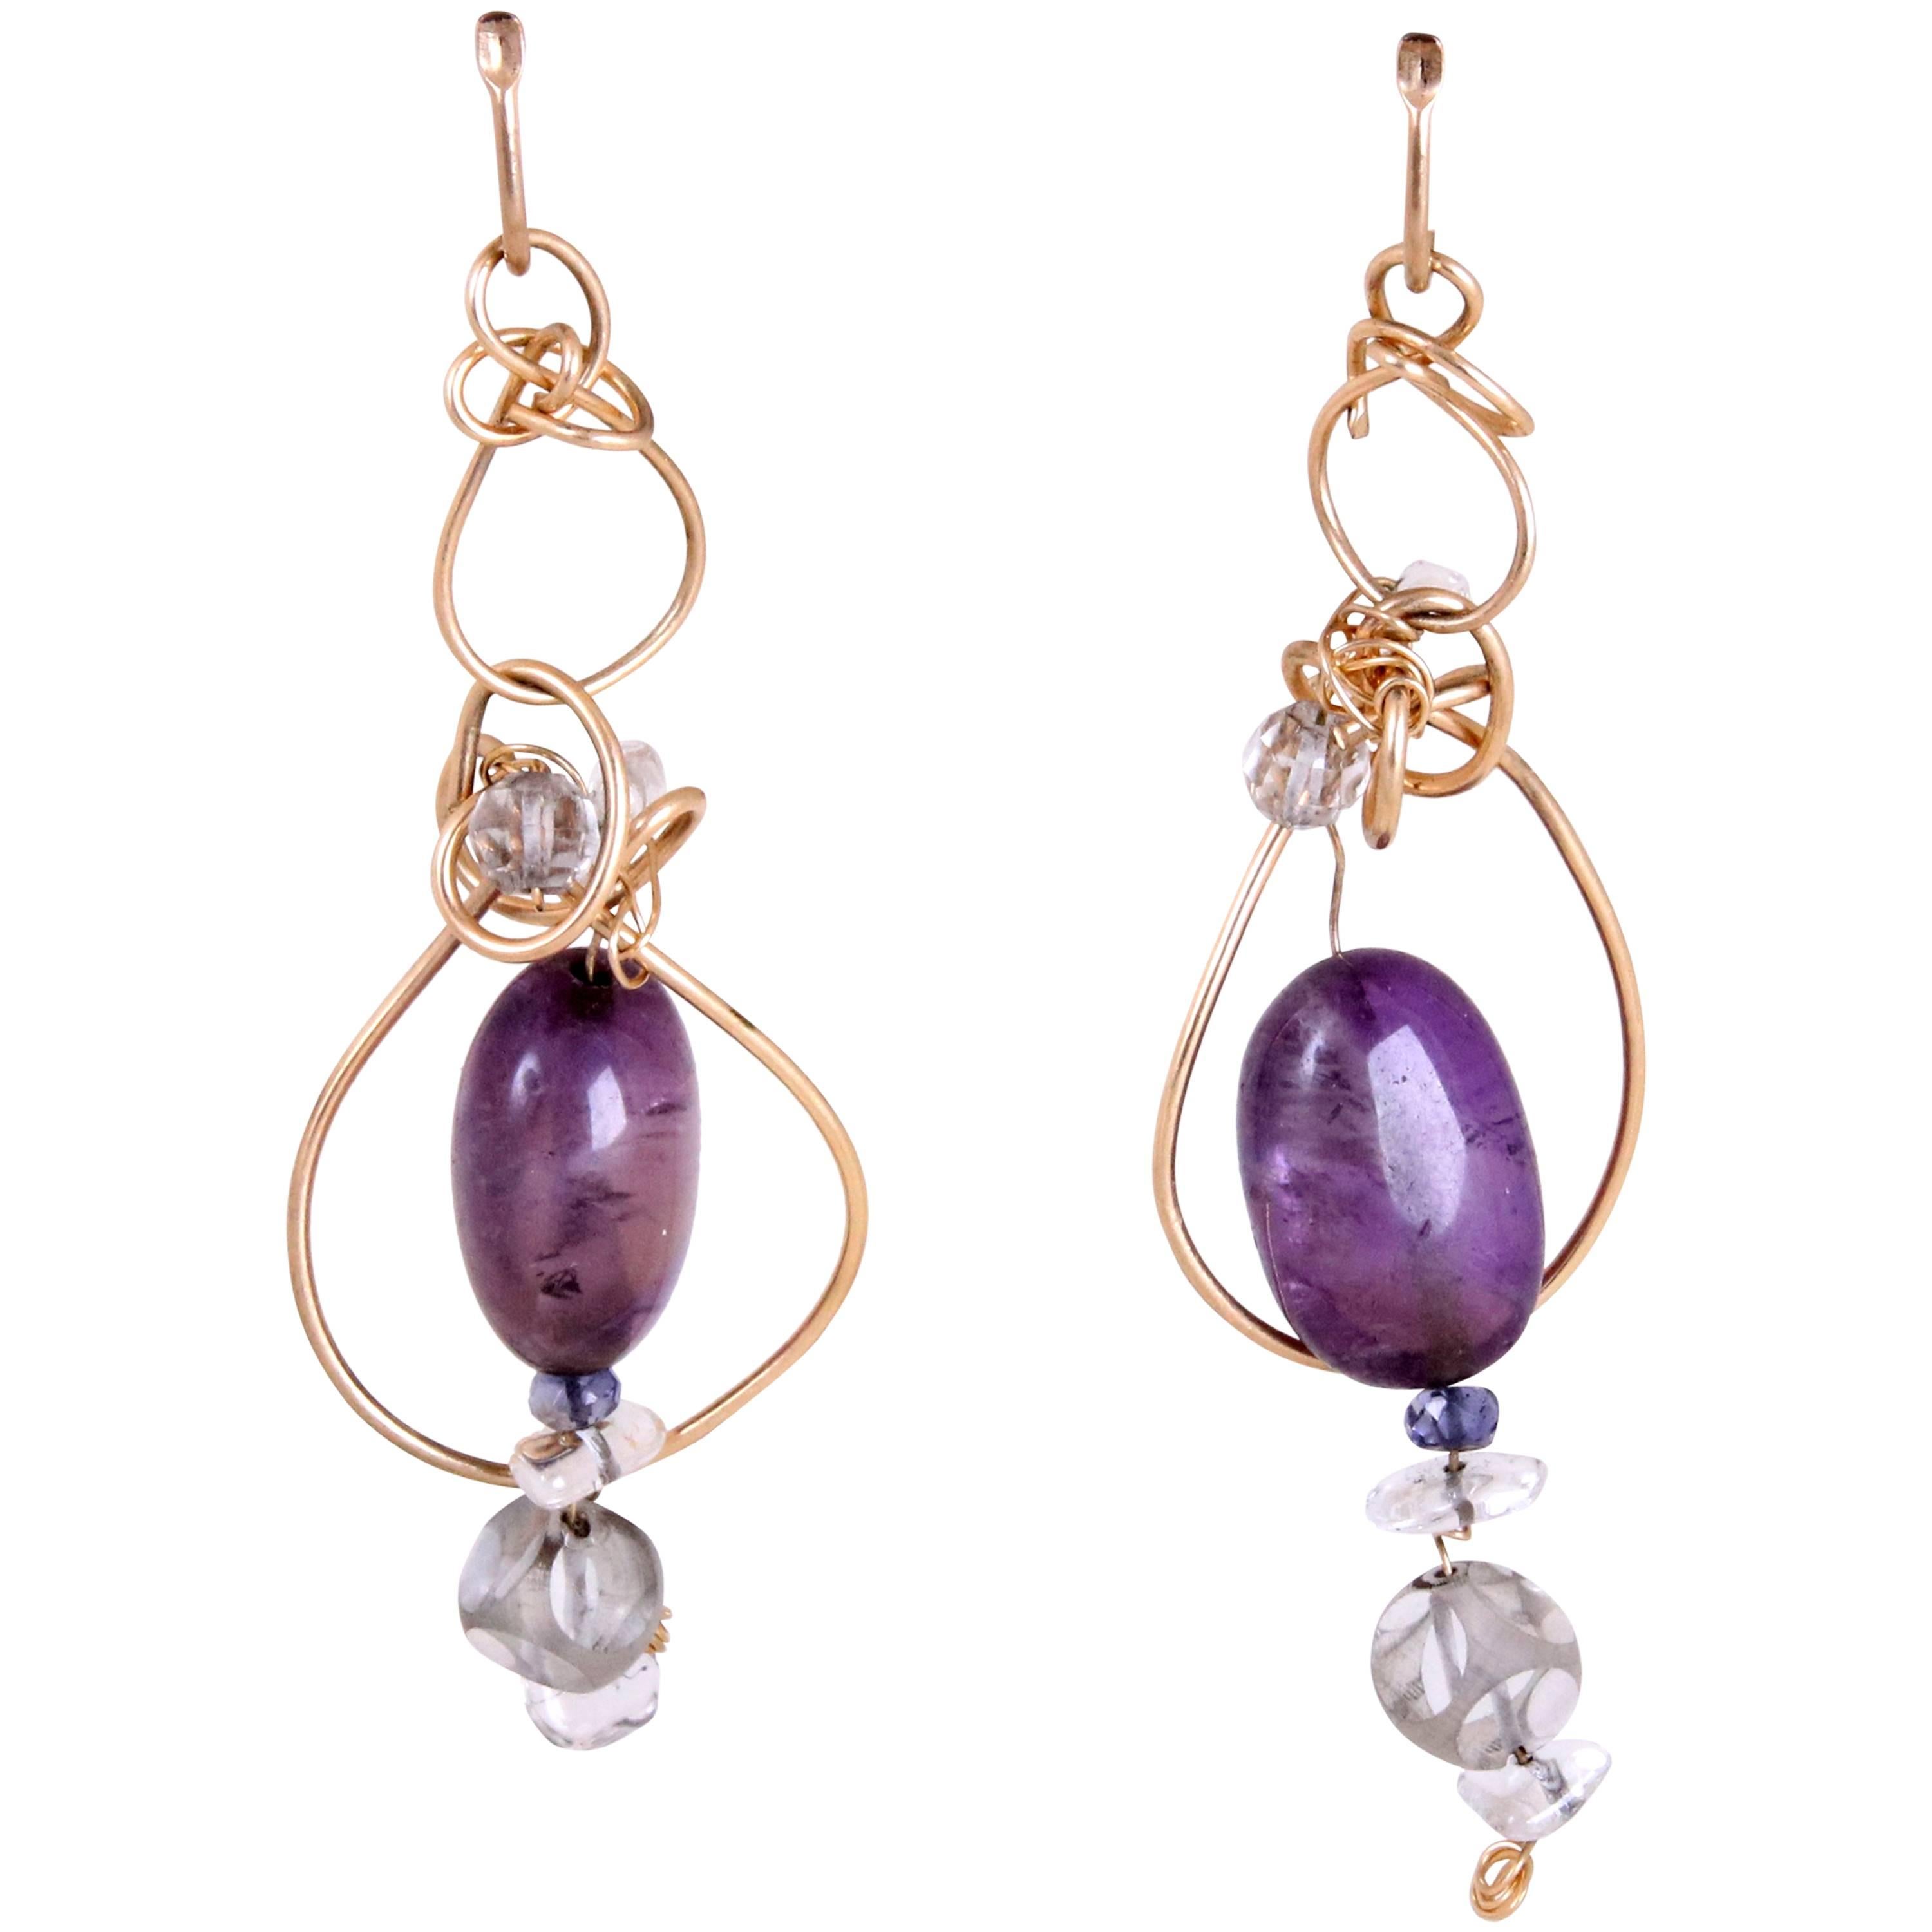 Kazuko 14k Gold Wire Wrapped Dangling Earrings w/Amethyst & Quartz Crystal Beads